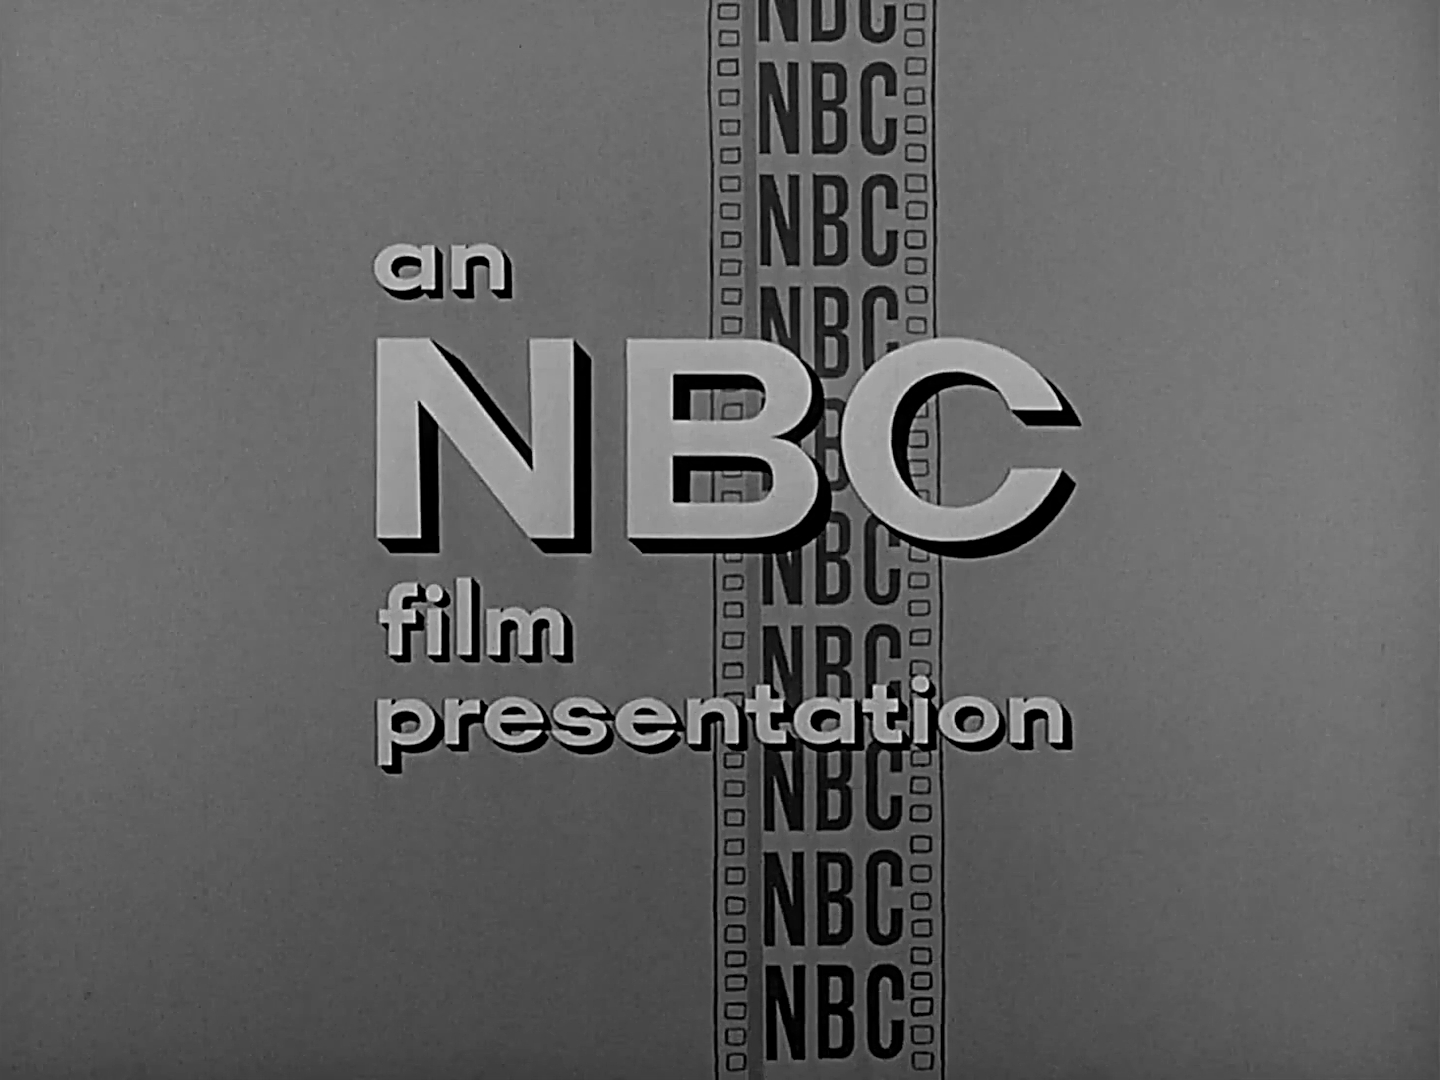 NBC Television Network (1957)